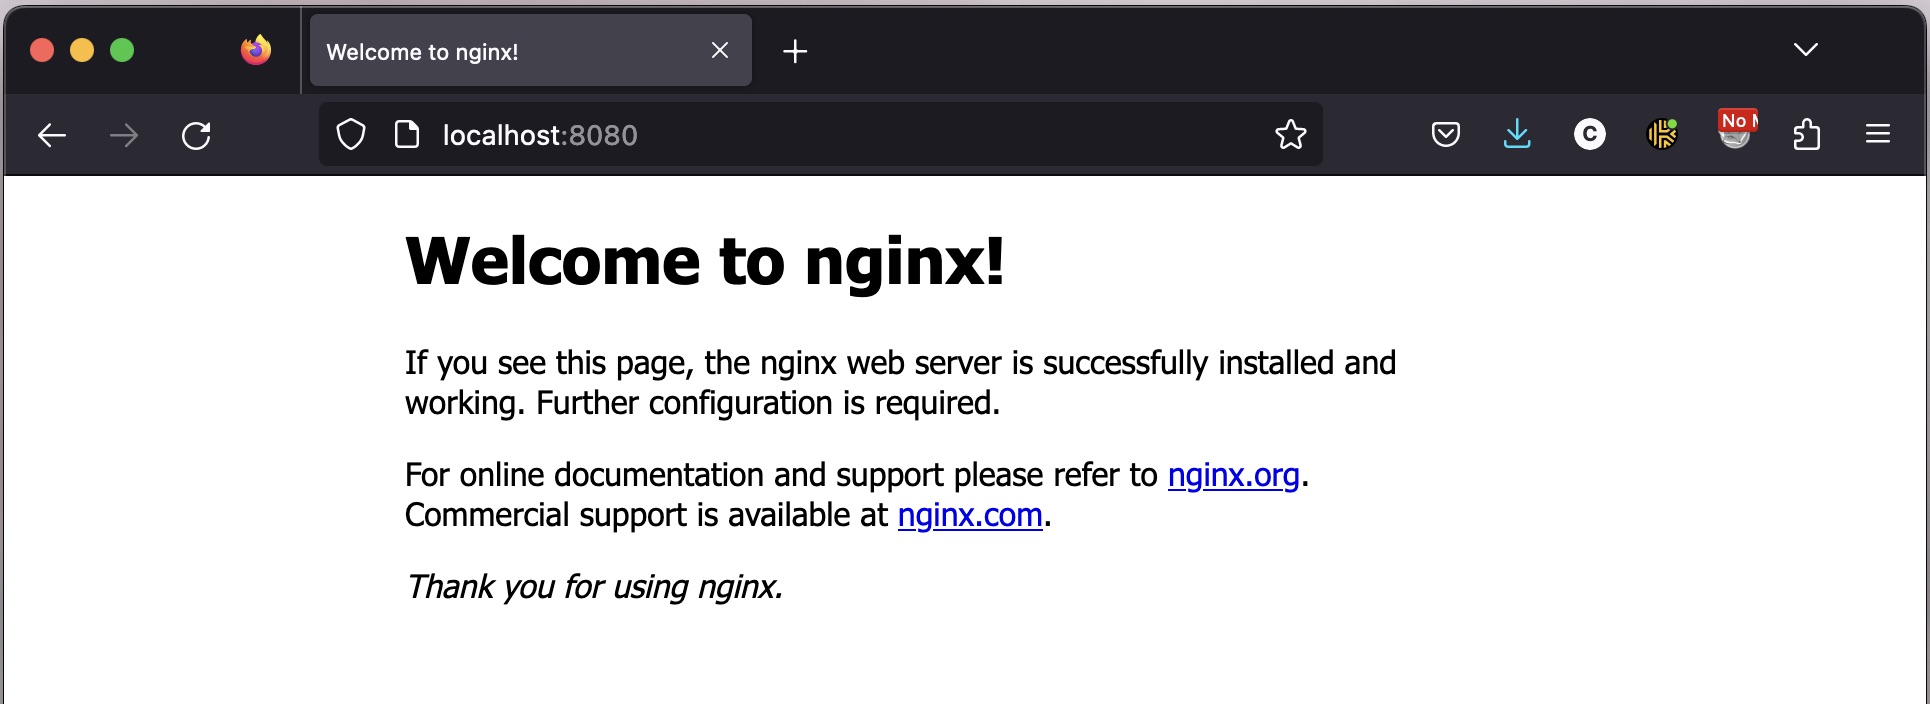 Nginx homepage